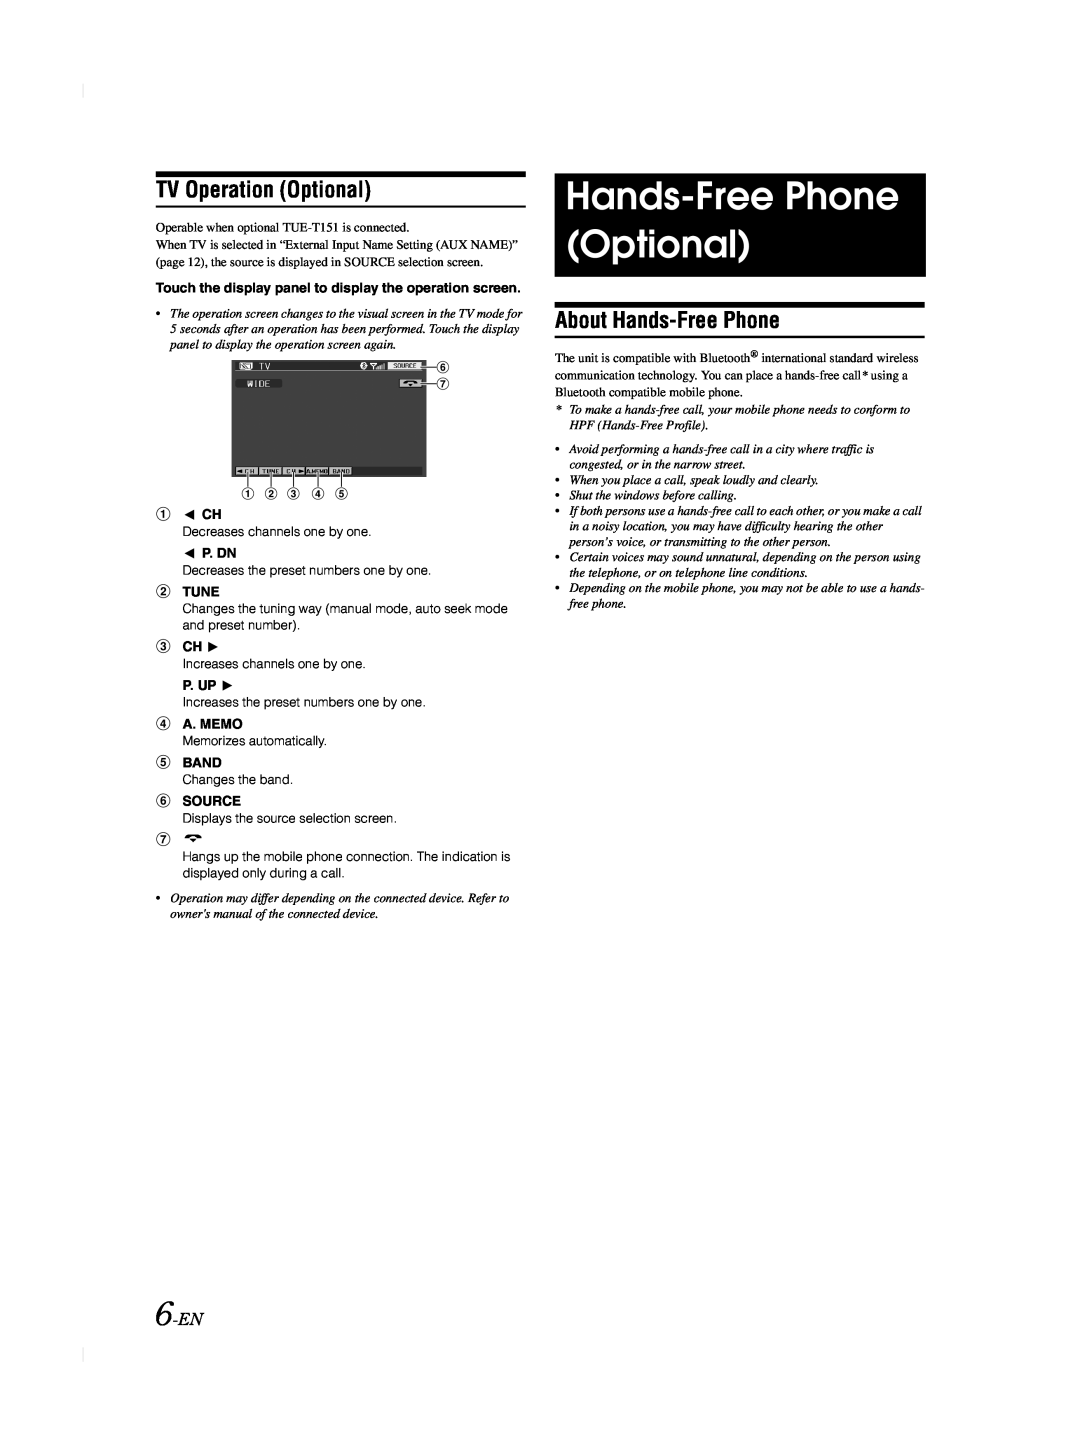 Alpine TME-M740BT Hands-Free Phone Optional, TV Operation Optional, About Hands-Free Phone, 6-EN, P. Dn, Tune, P. Up, Band 